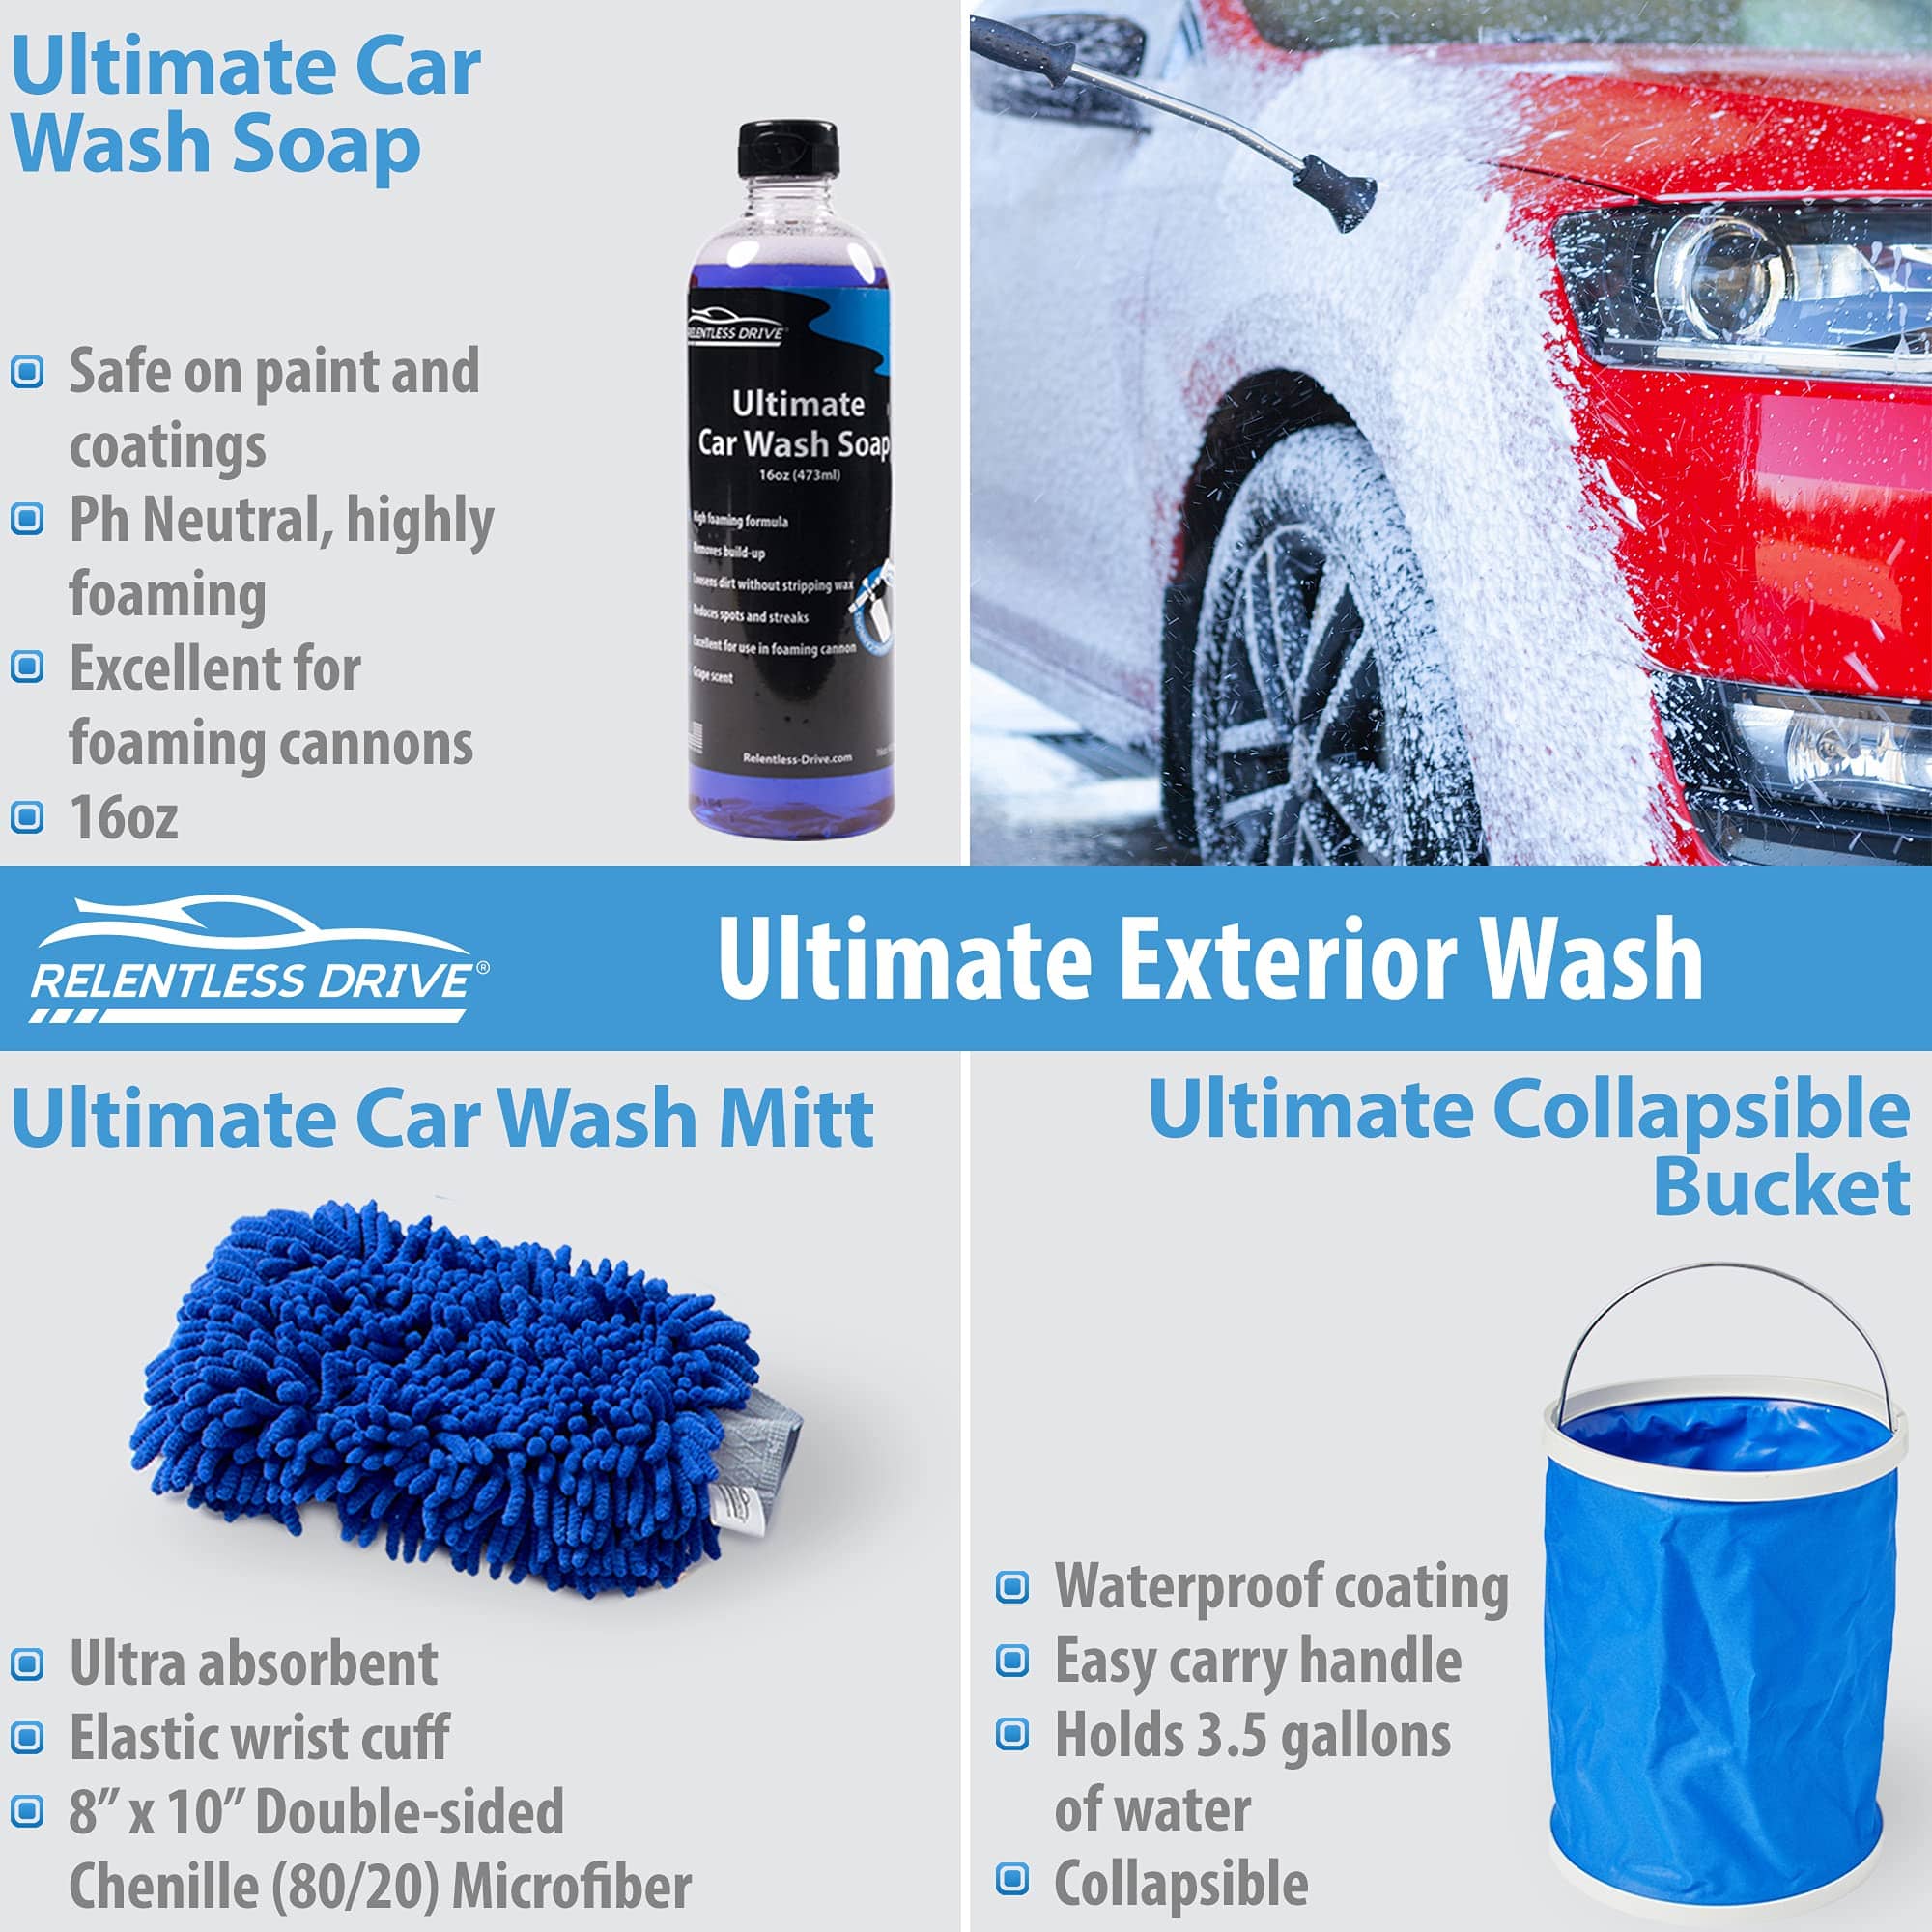 Relentless Drive Car Wax Kit (Gallon) - Wet or Waterless Ceramic Wax 